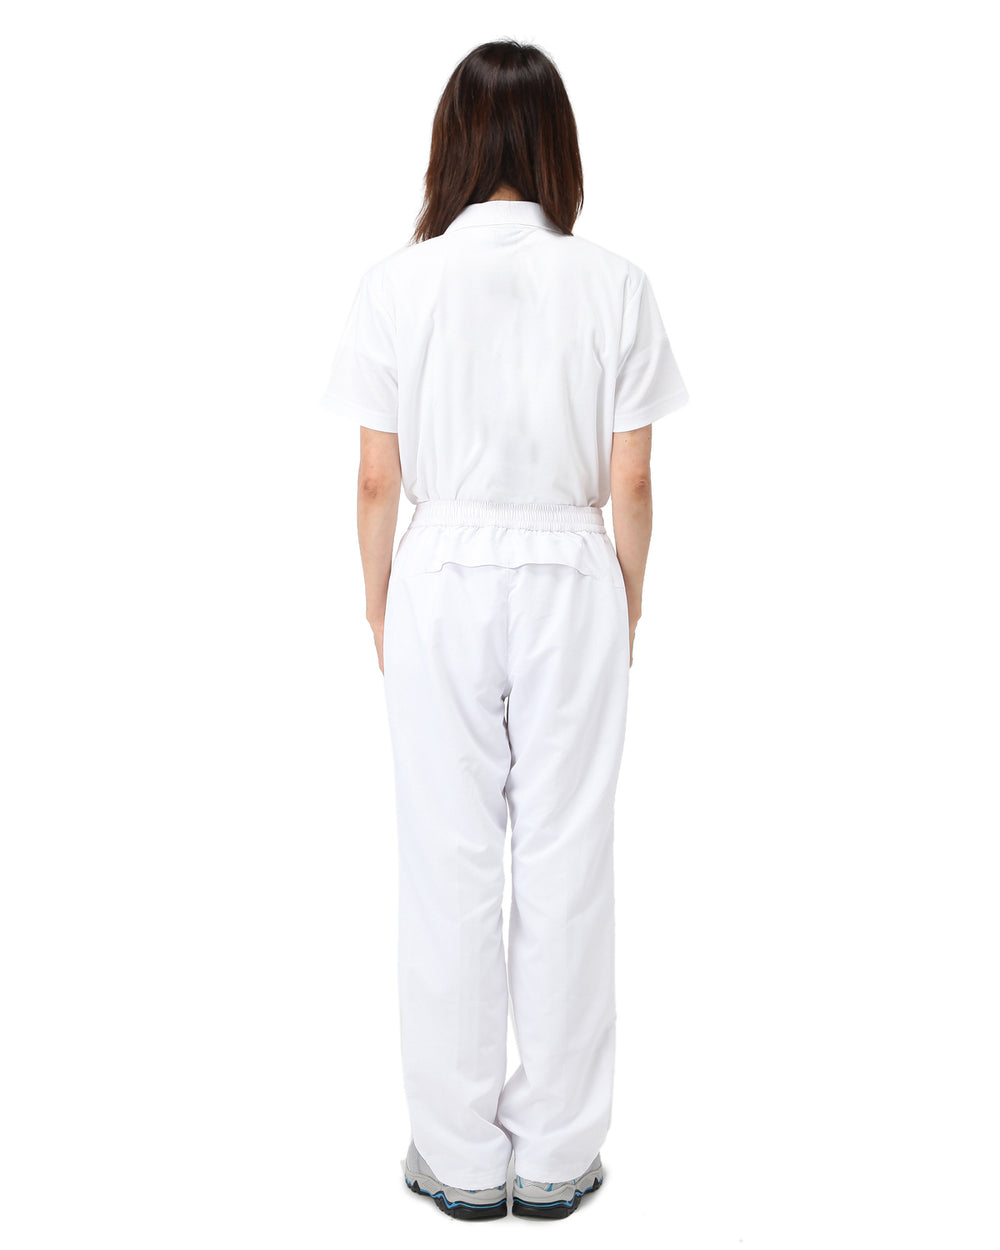 White pants can be worn on the Shikoku henro  (comfortable and functional fabrics)